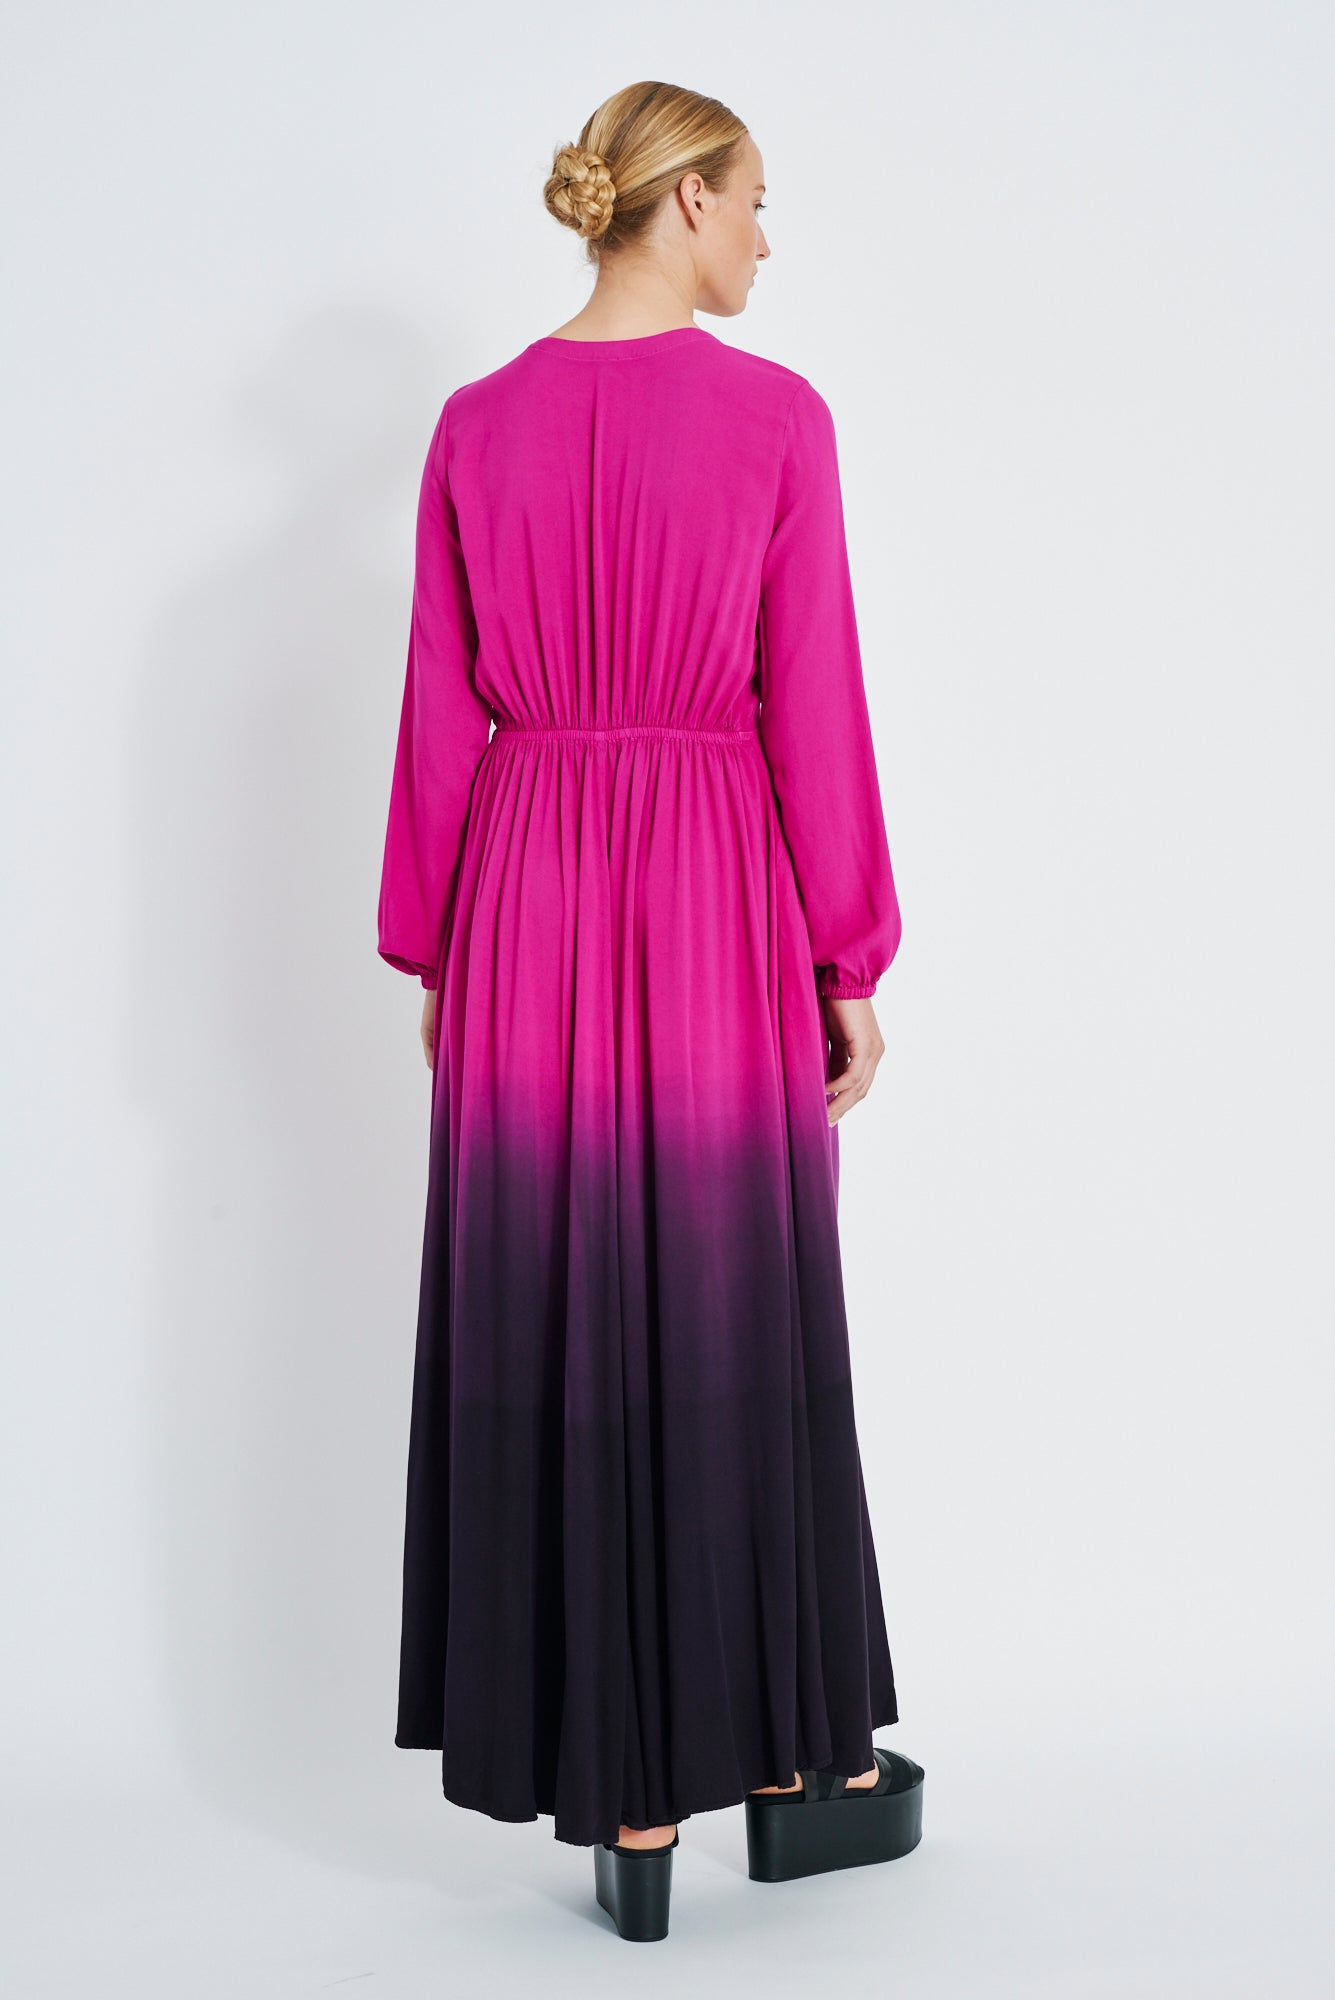 Dahlia Dip Dye Viscose Studio 54 Dress